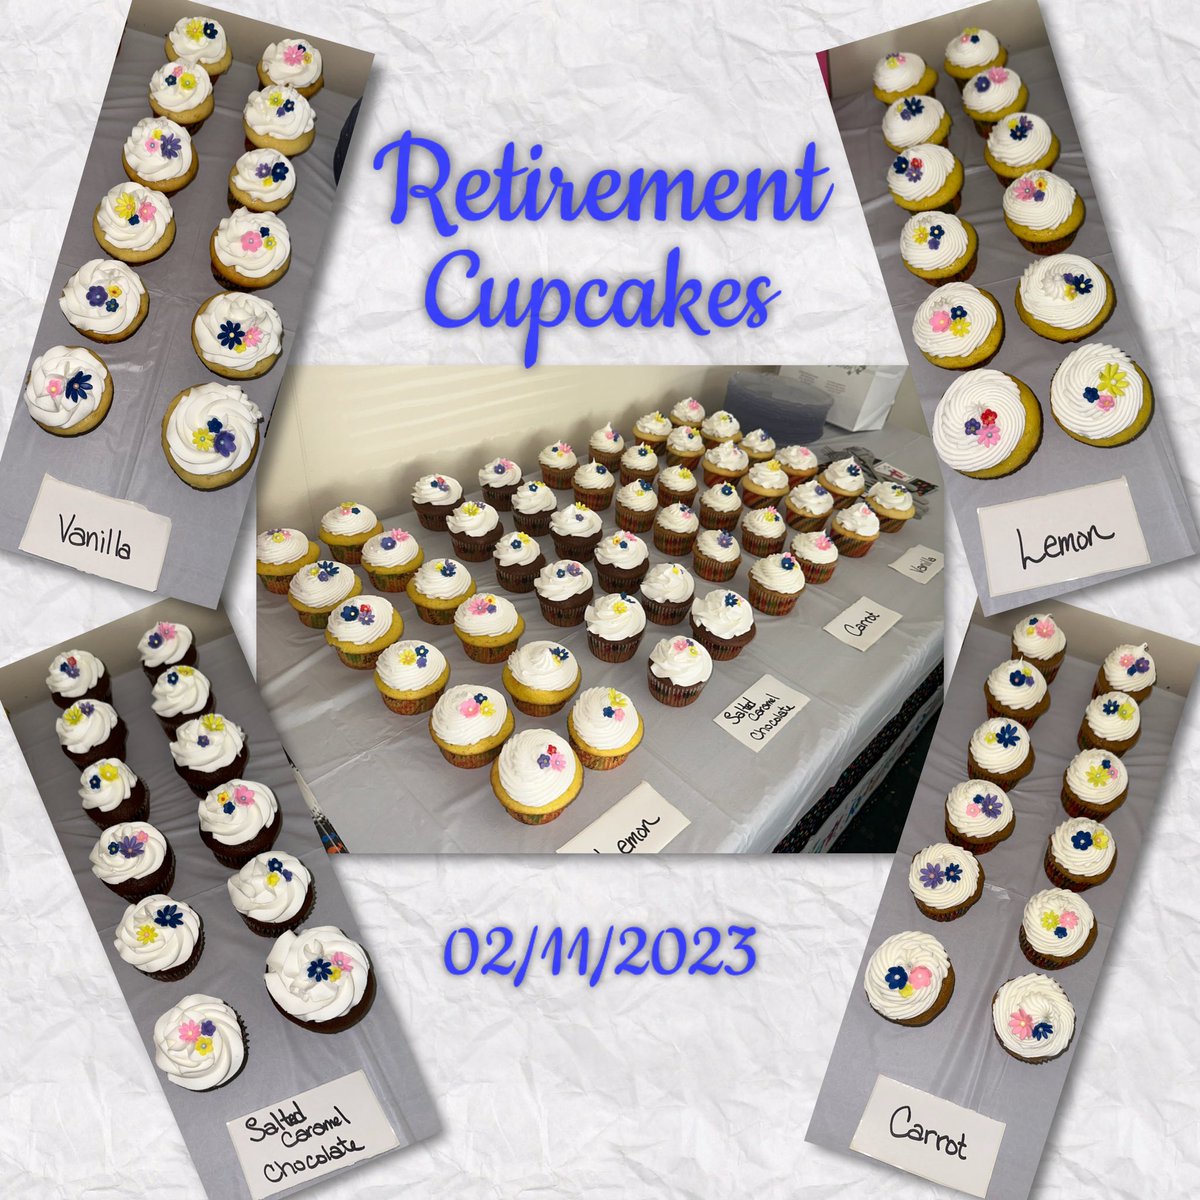 Retirement cupcakes. Vanilla, Salted Caramel Chocolate, Carrot & Lemon w/flower decoration. 02/11/2023 #retirement #flowercupcakes